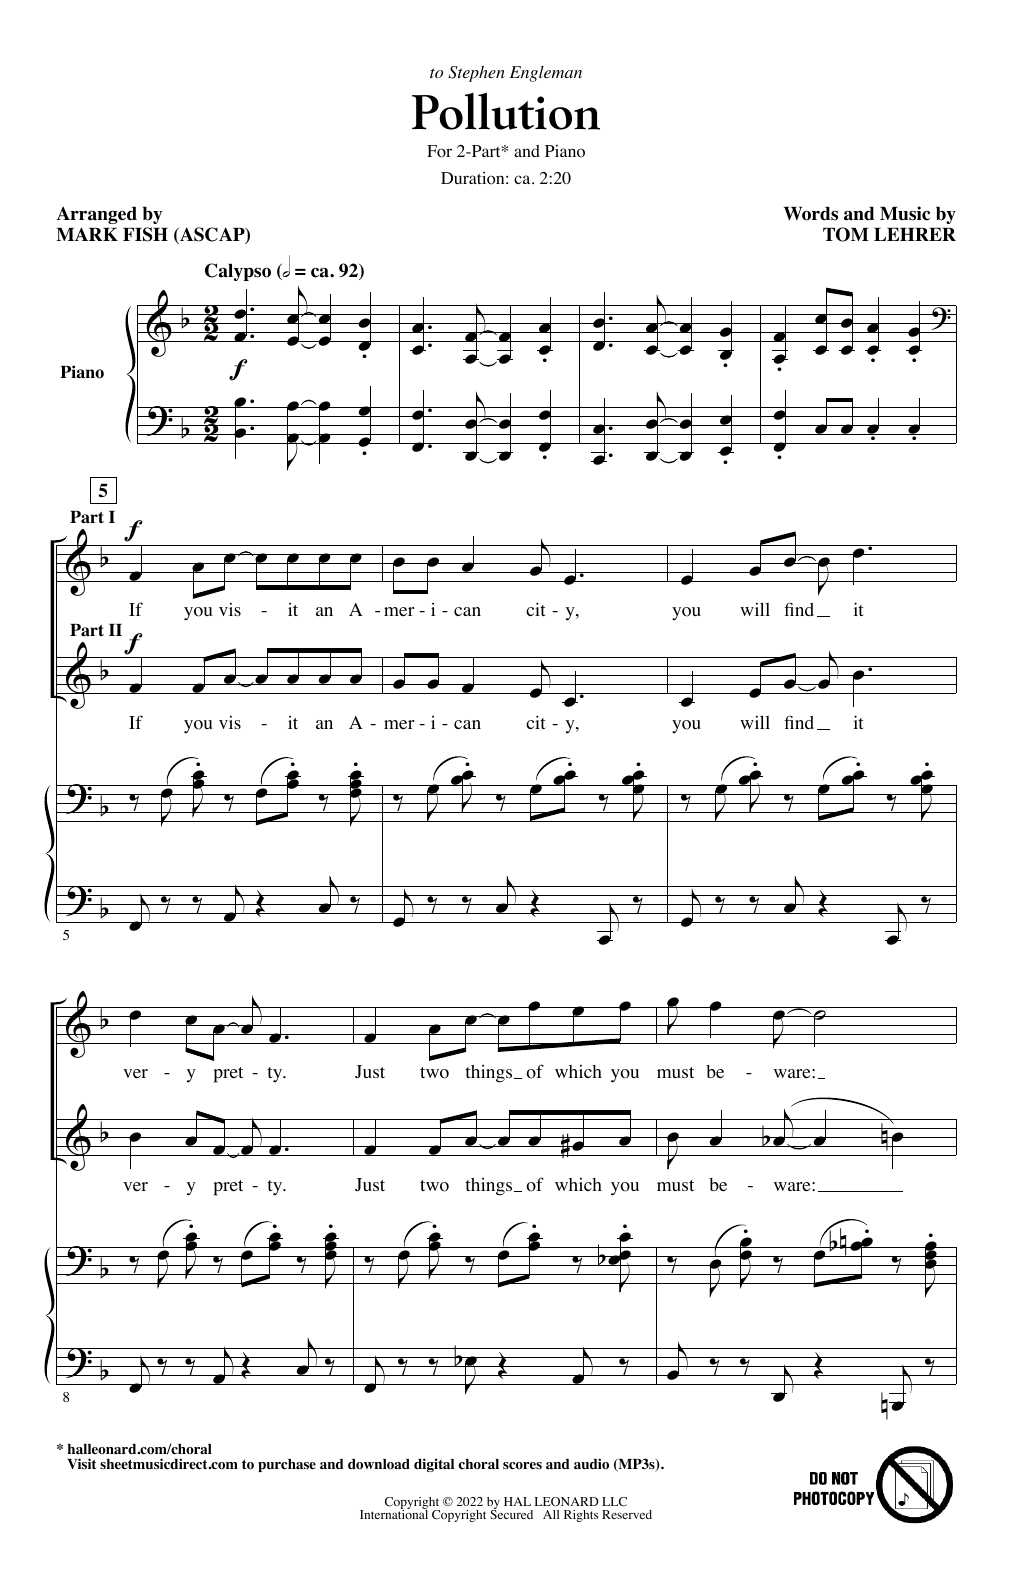 Tom Lehrer Pollution (arr. Mark Fish) Sheet Music Notes & Chords for 2-Part Choir - Download or Print PDF